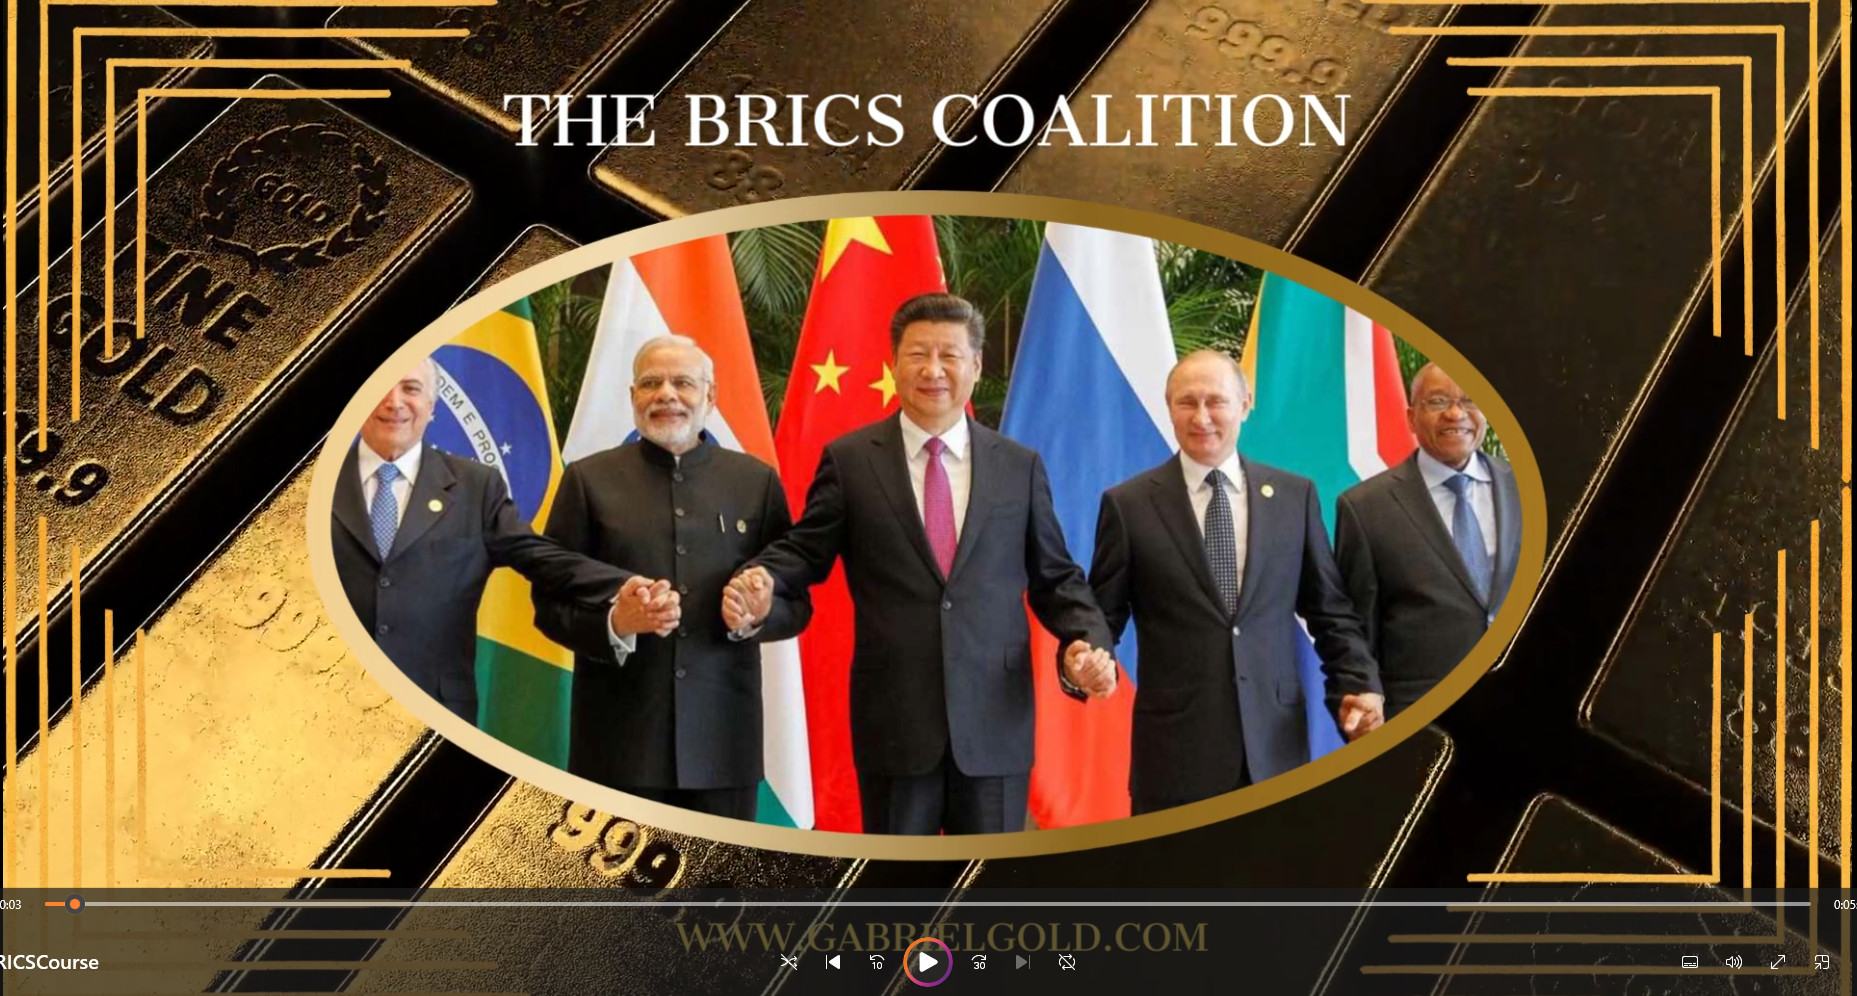 The BRICS Coalition